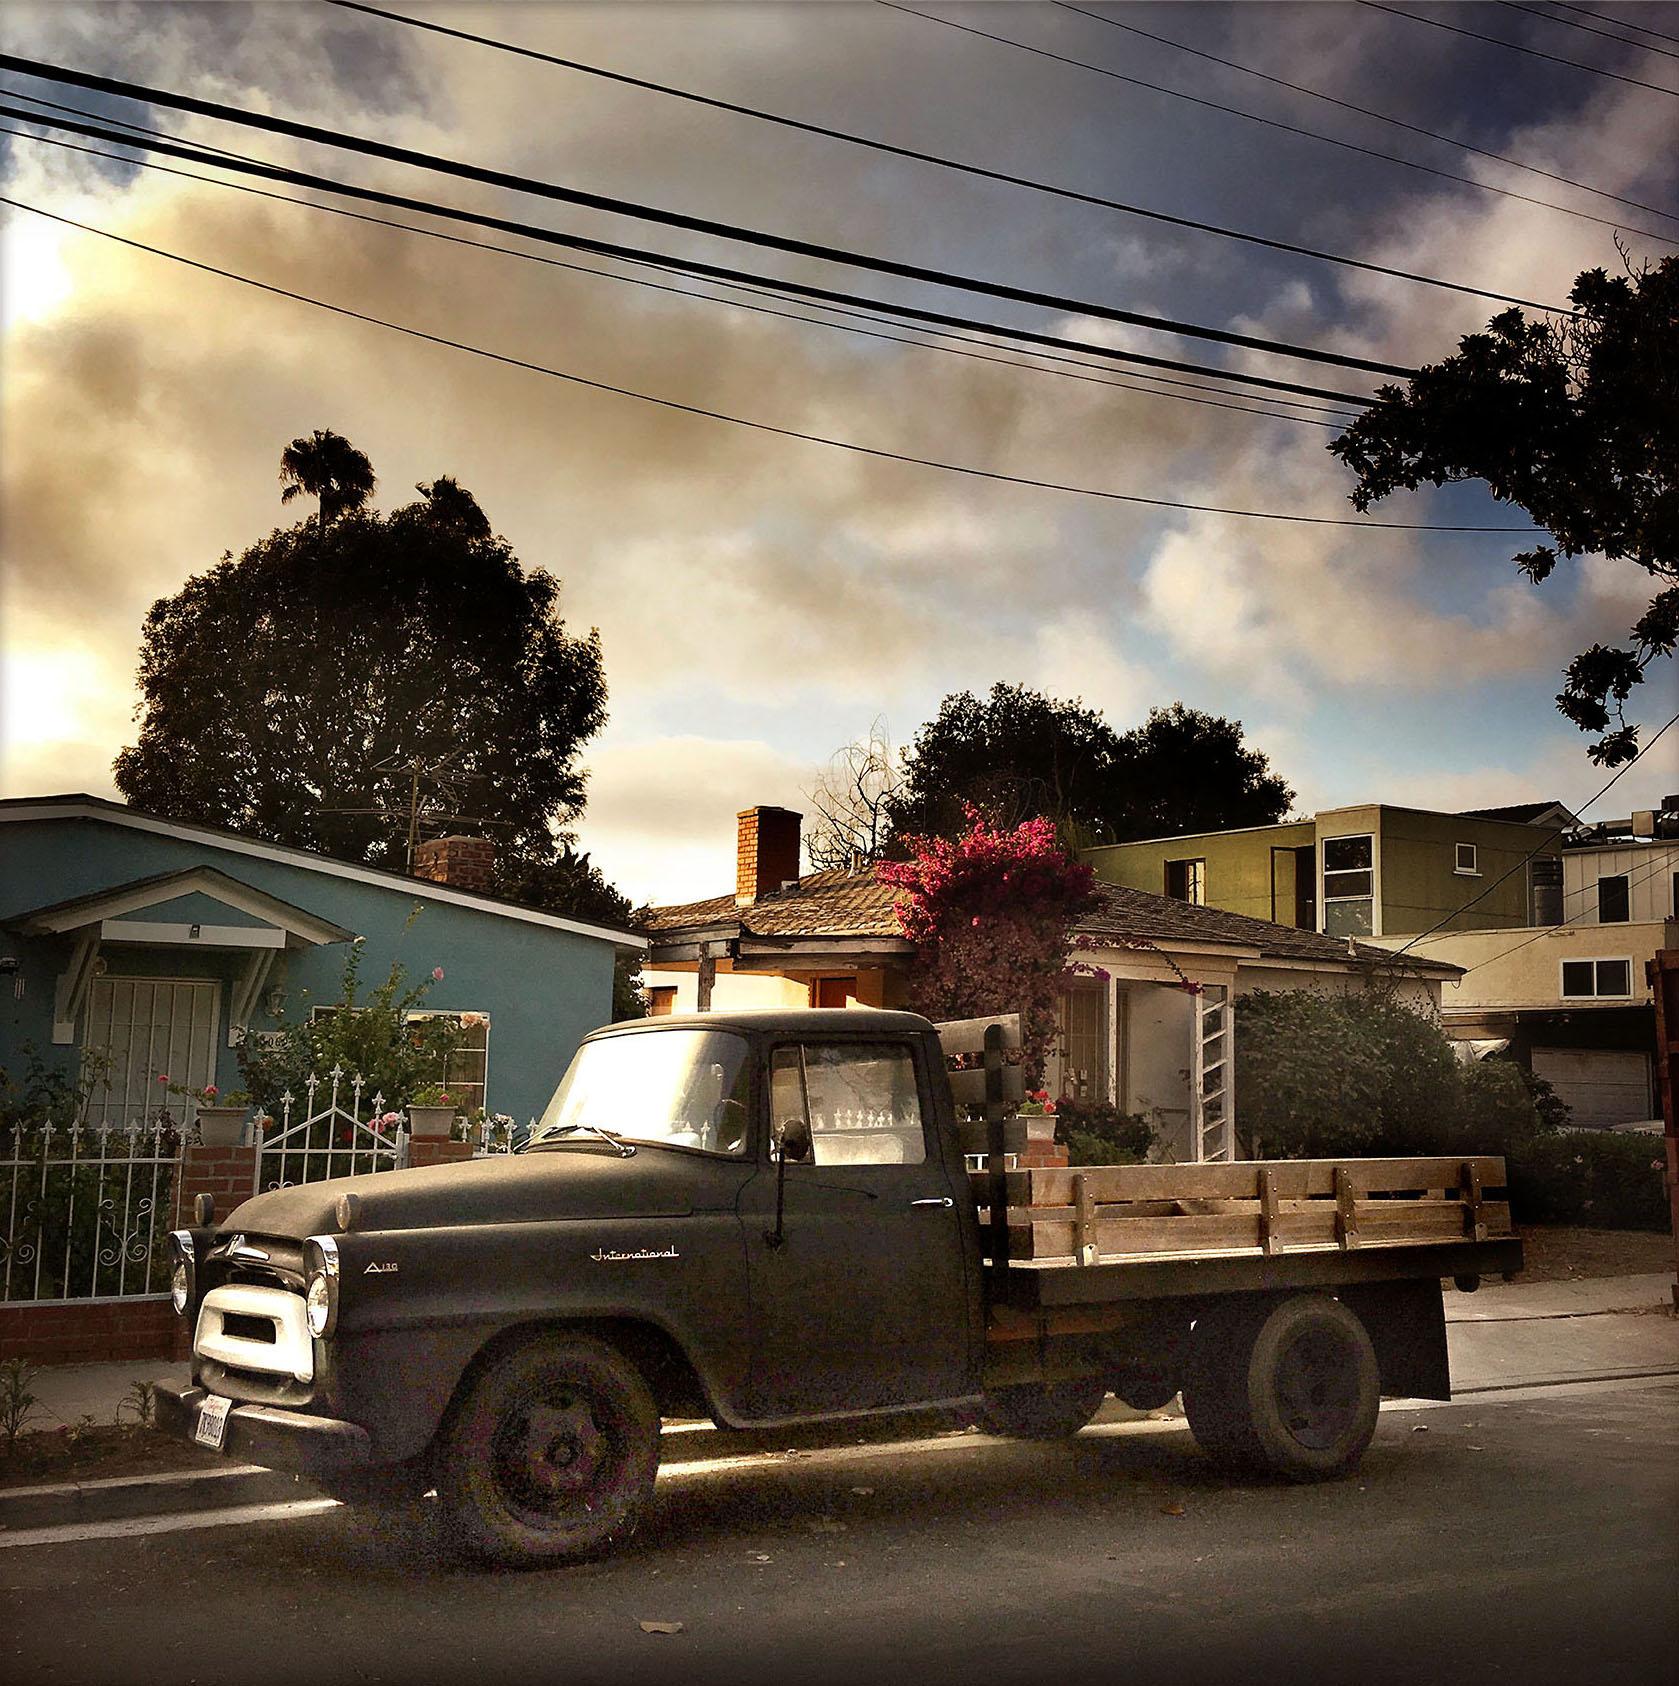 Venice Truck (Los Angeles), Sally Davies